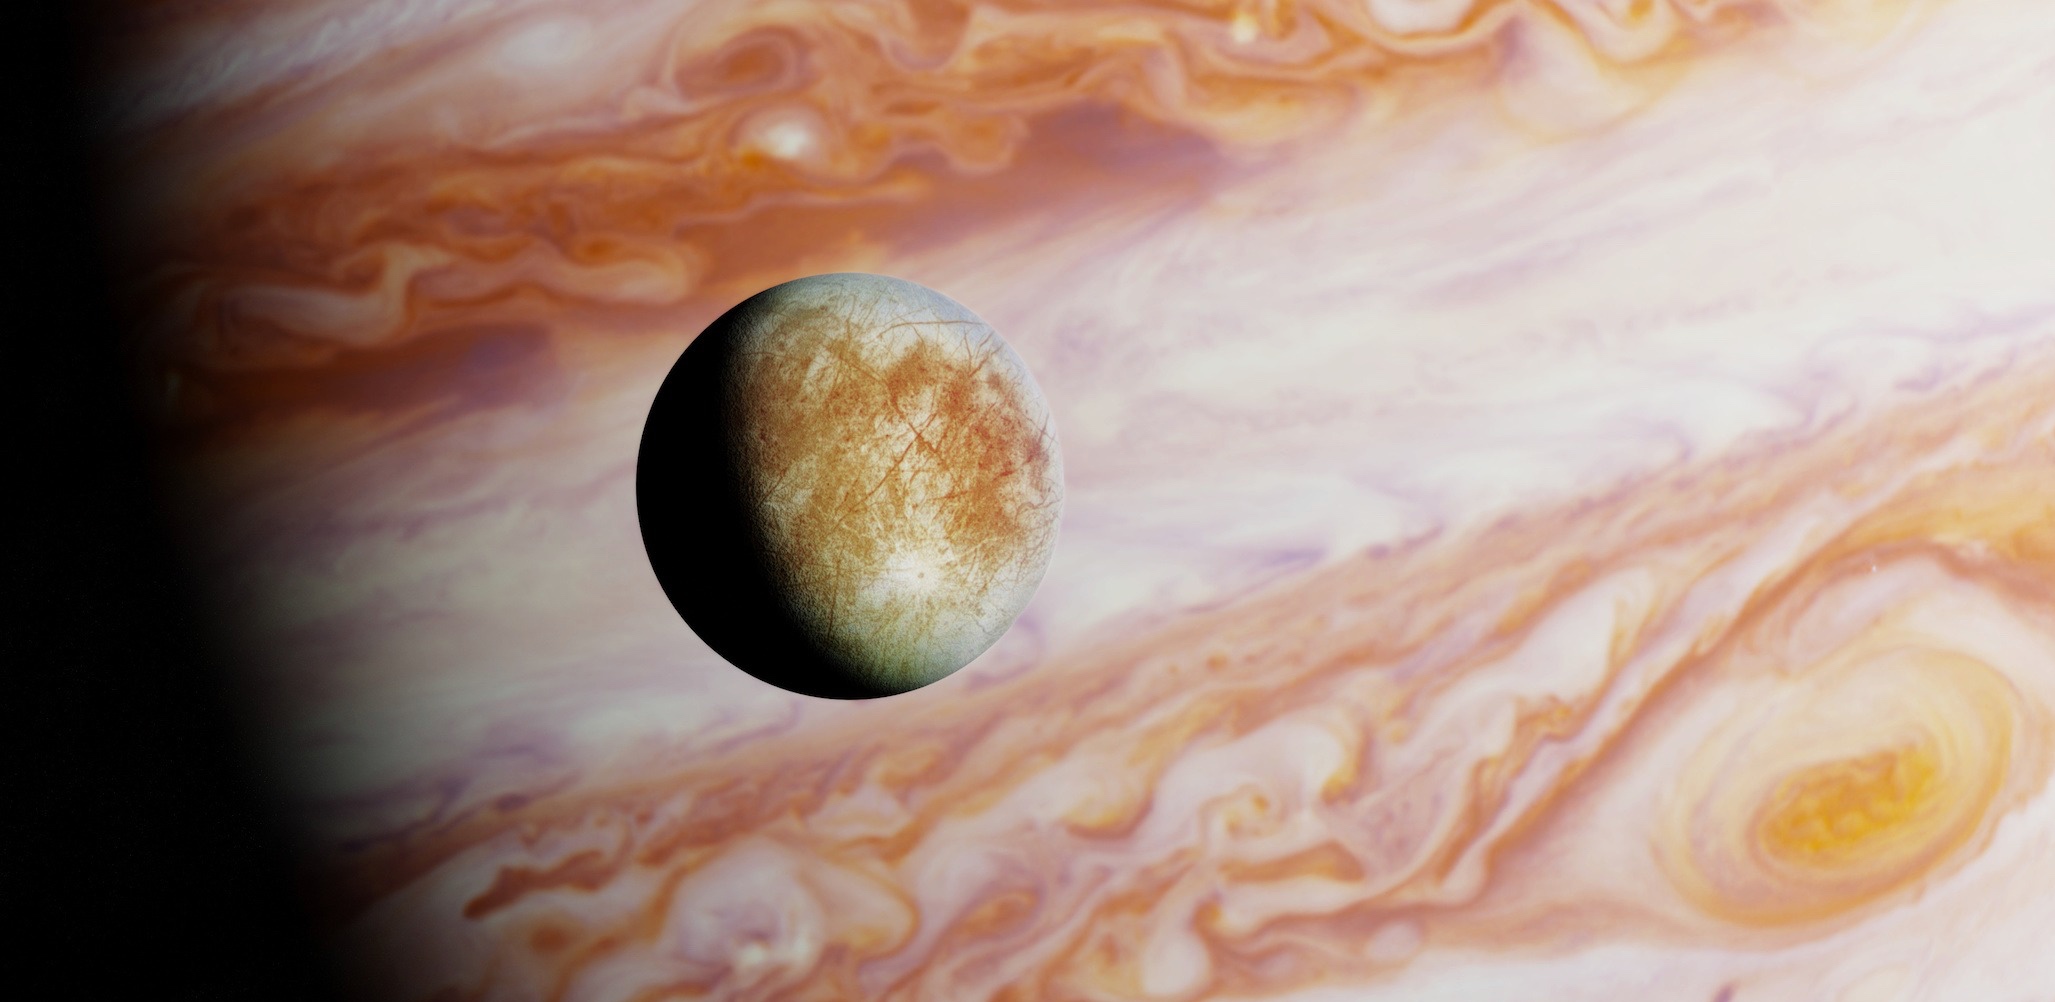 Europe est une lune gelée de Jupiter. © dottedyeti, Adobe Stock